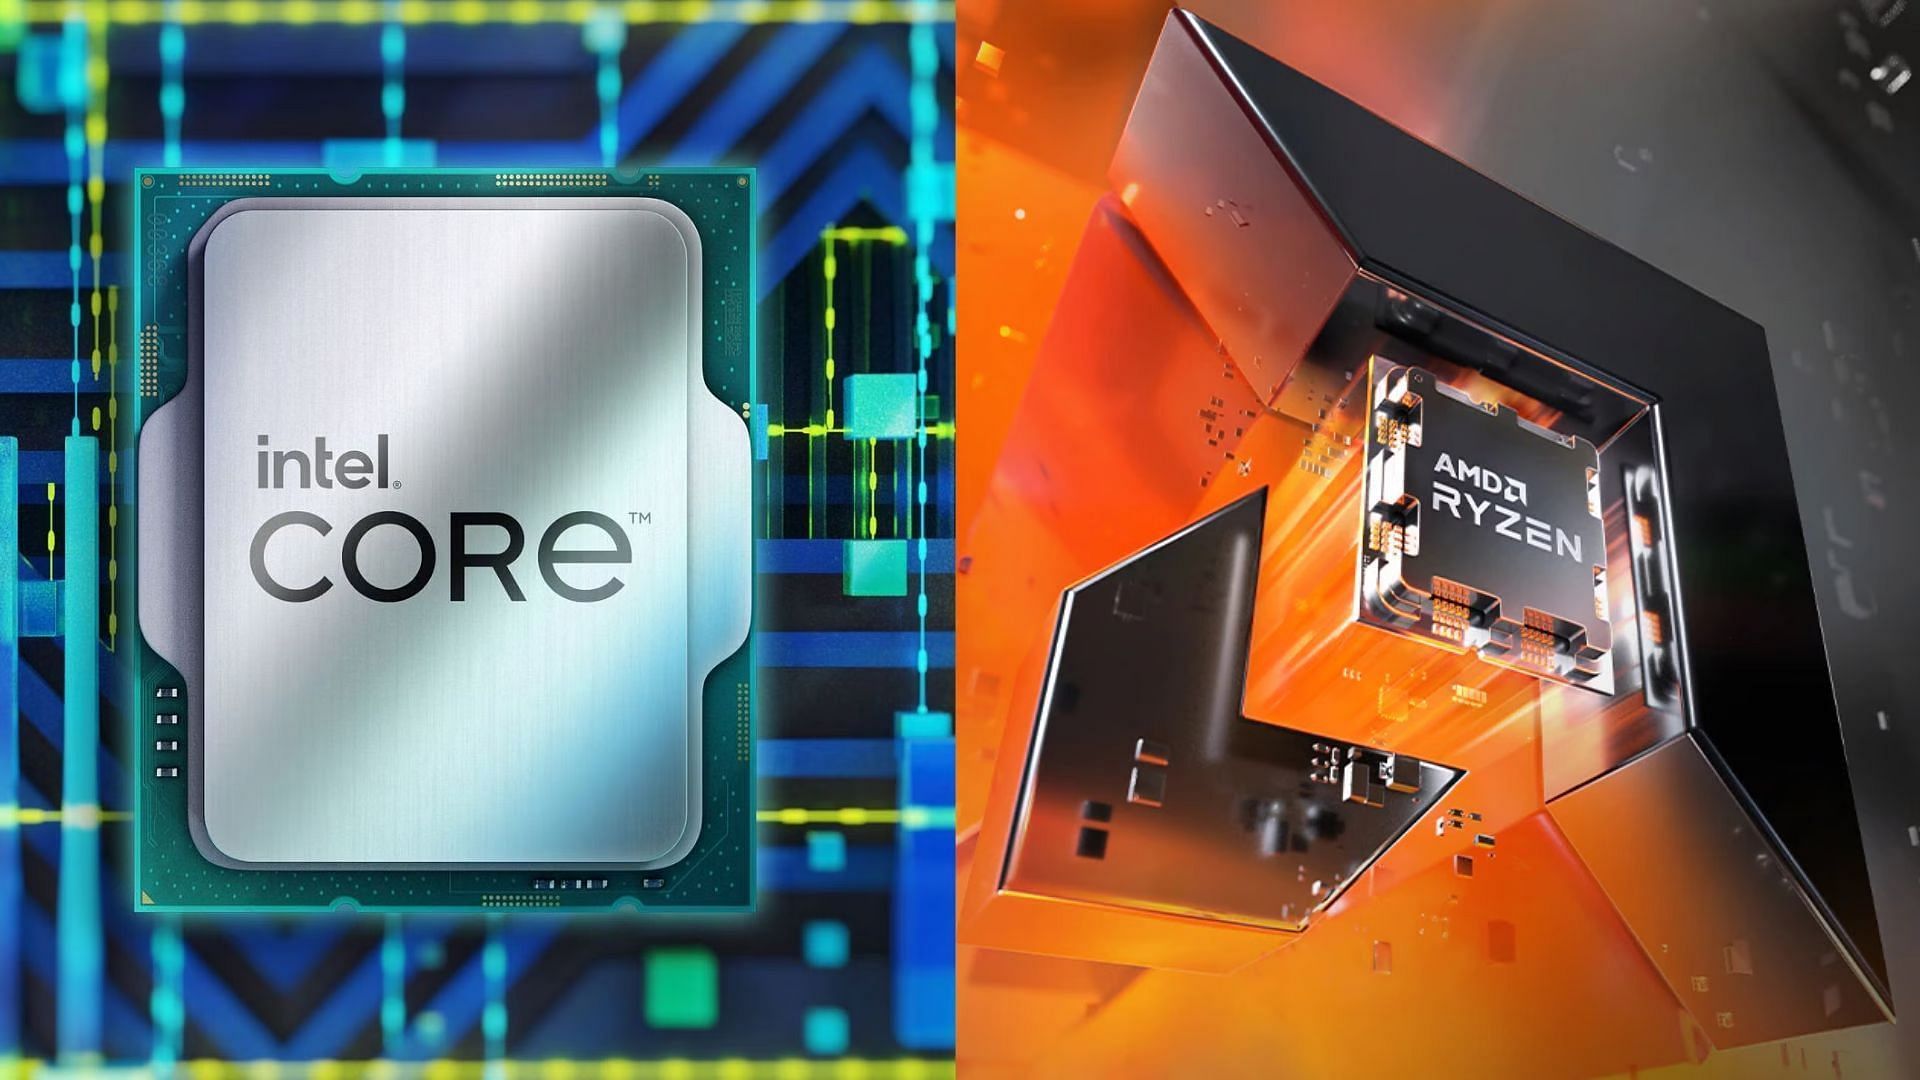 Intel Core and AMD Ryzen